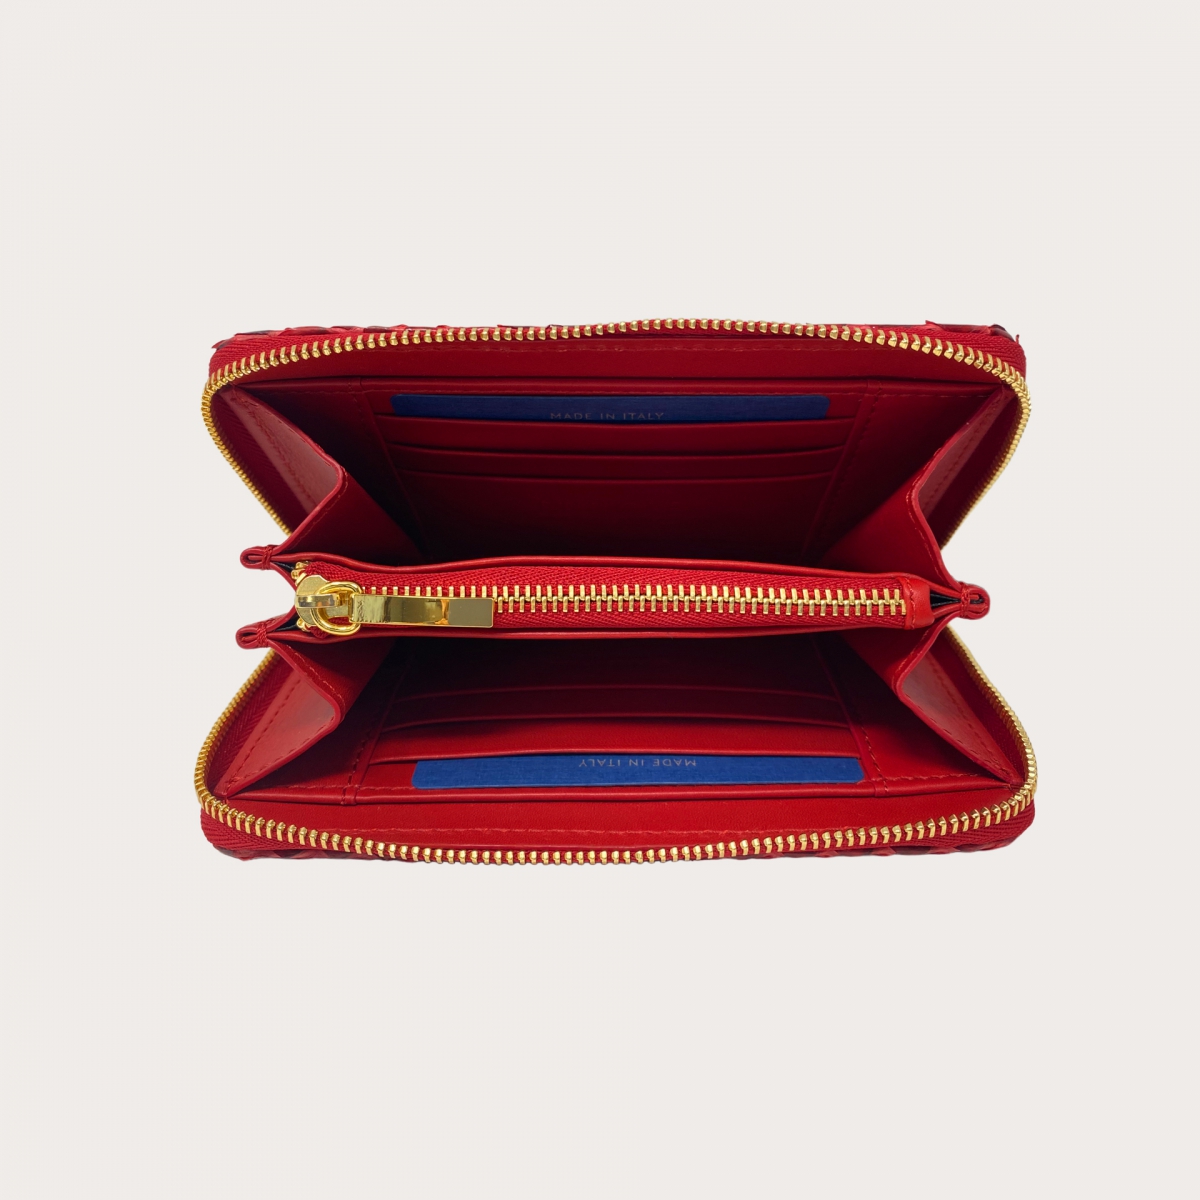 Prada Red Saffiano Leather Zippy Coin Purse Wallet